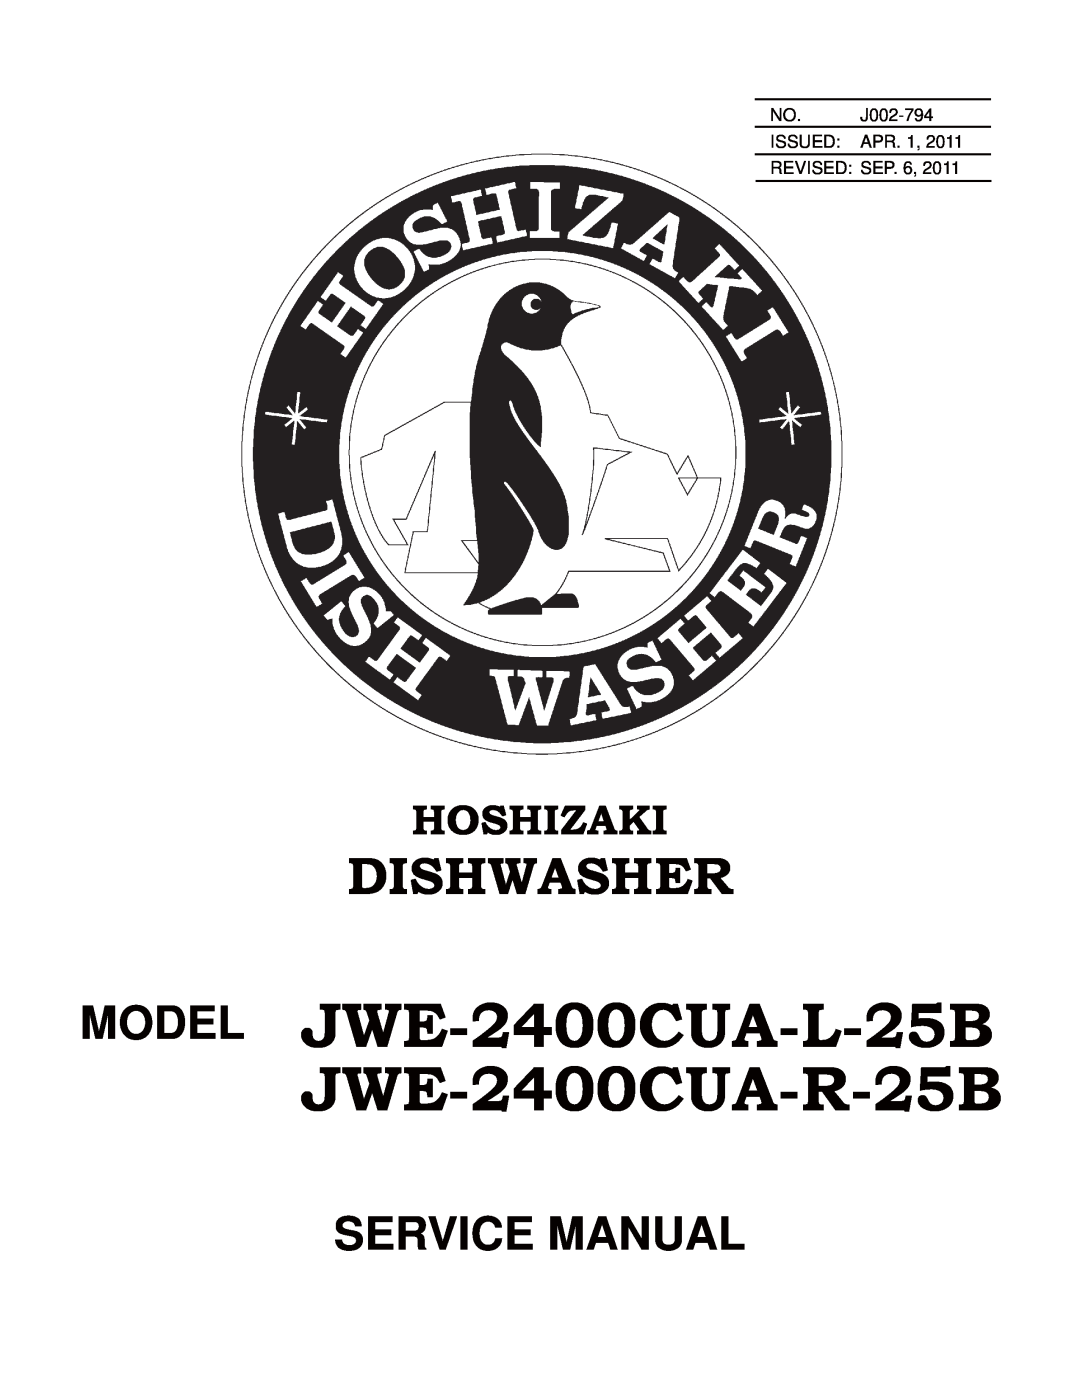 Hoshizaki JWE-24000CUA-L-25B service manual MODEL JWE-2400CUA-L-25B JWE-2400CUA-R-25B, Dishwasher, Hoshizaki 